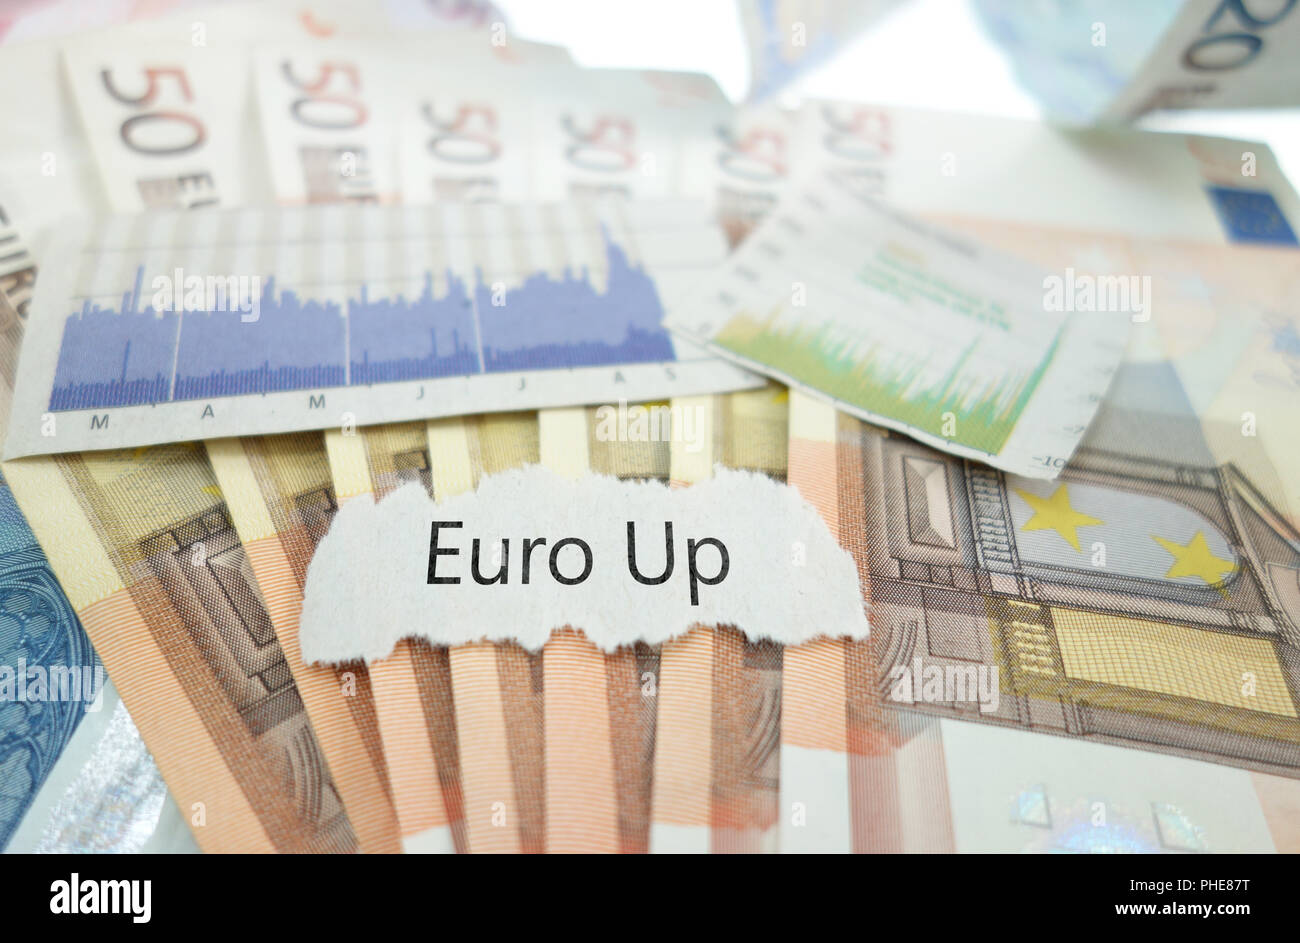 Euro Up news Stock Photo